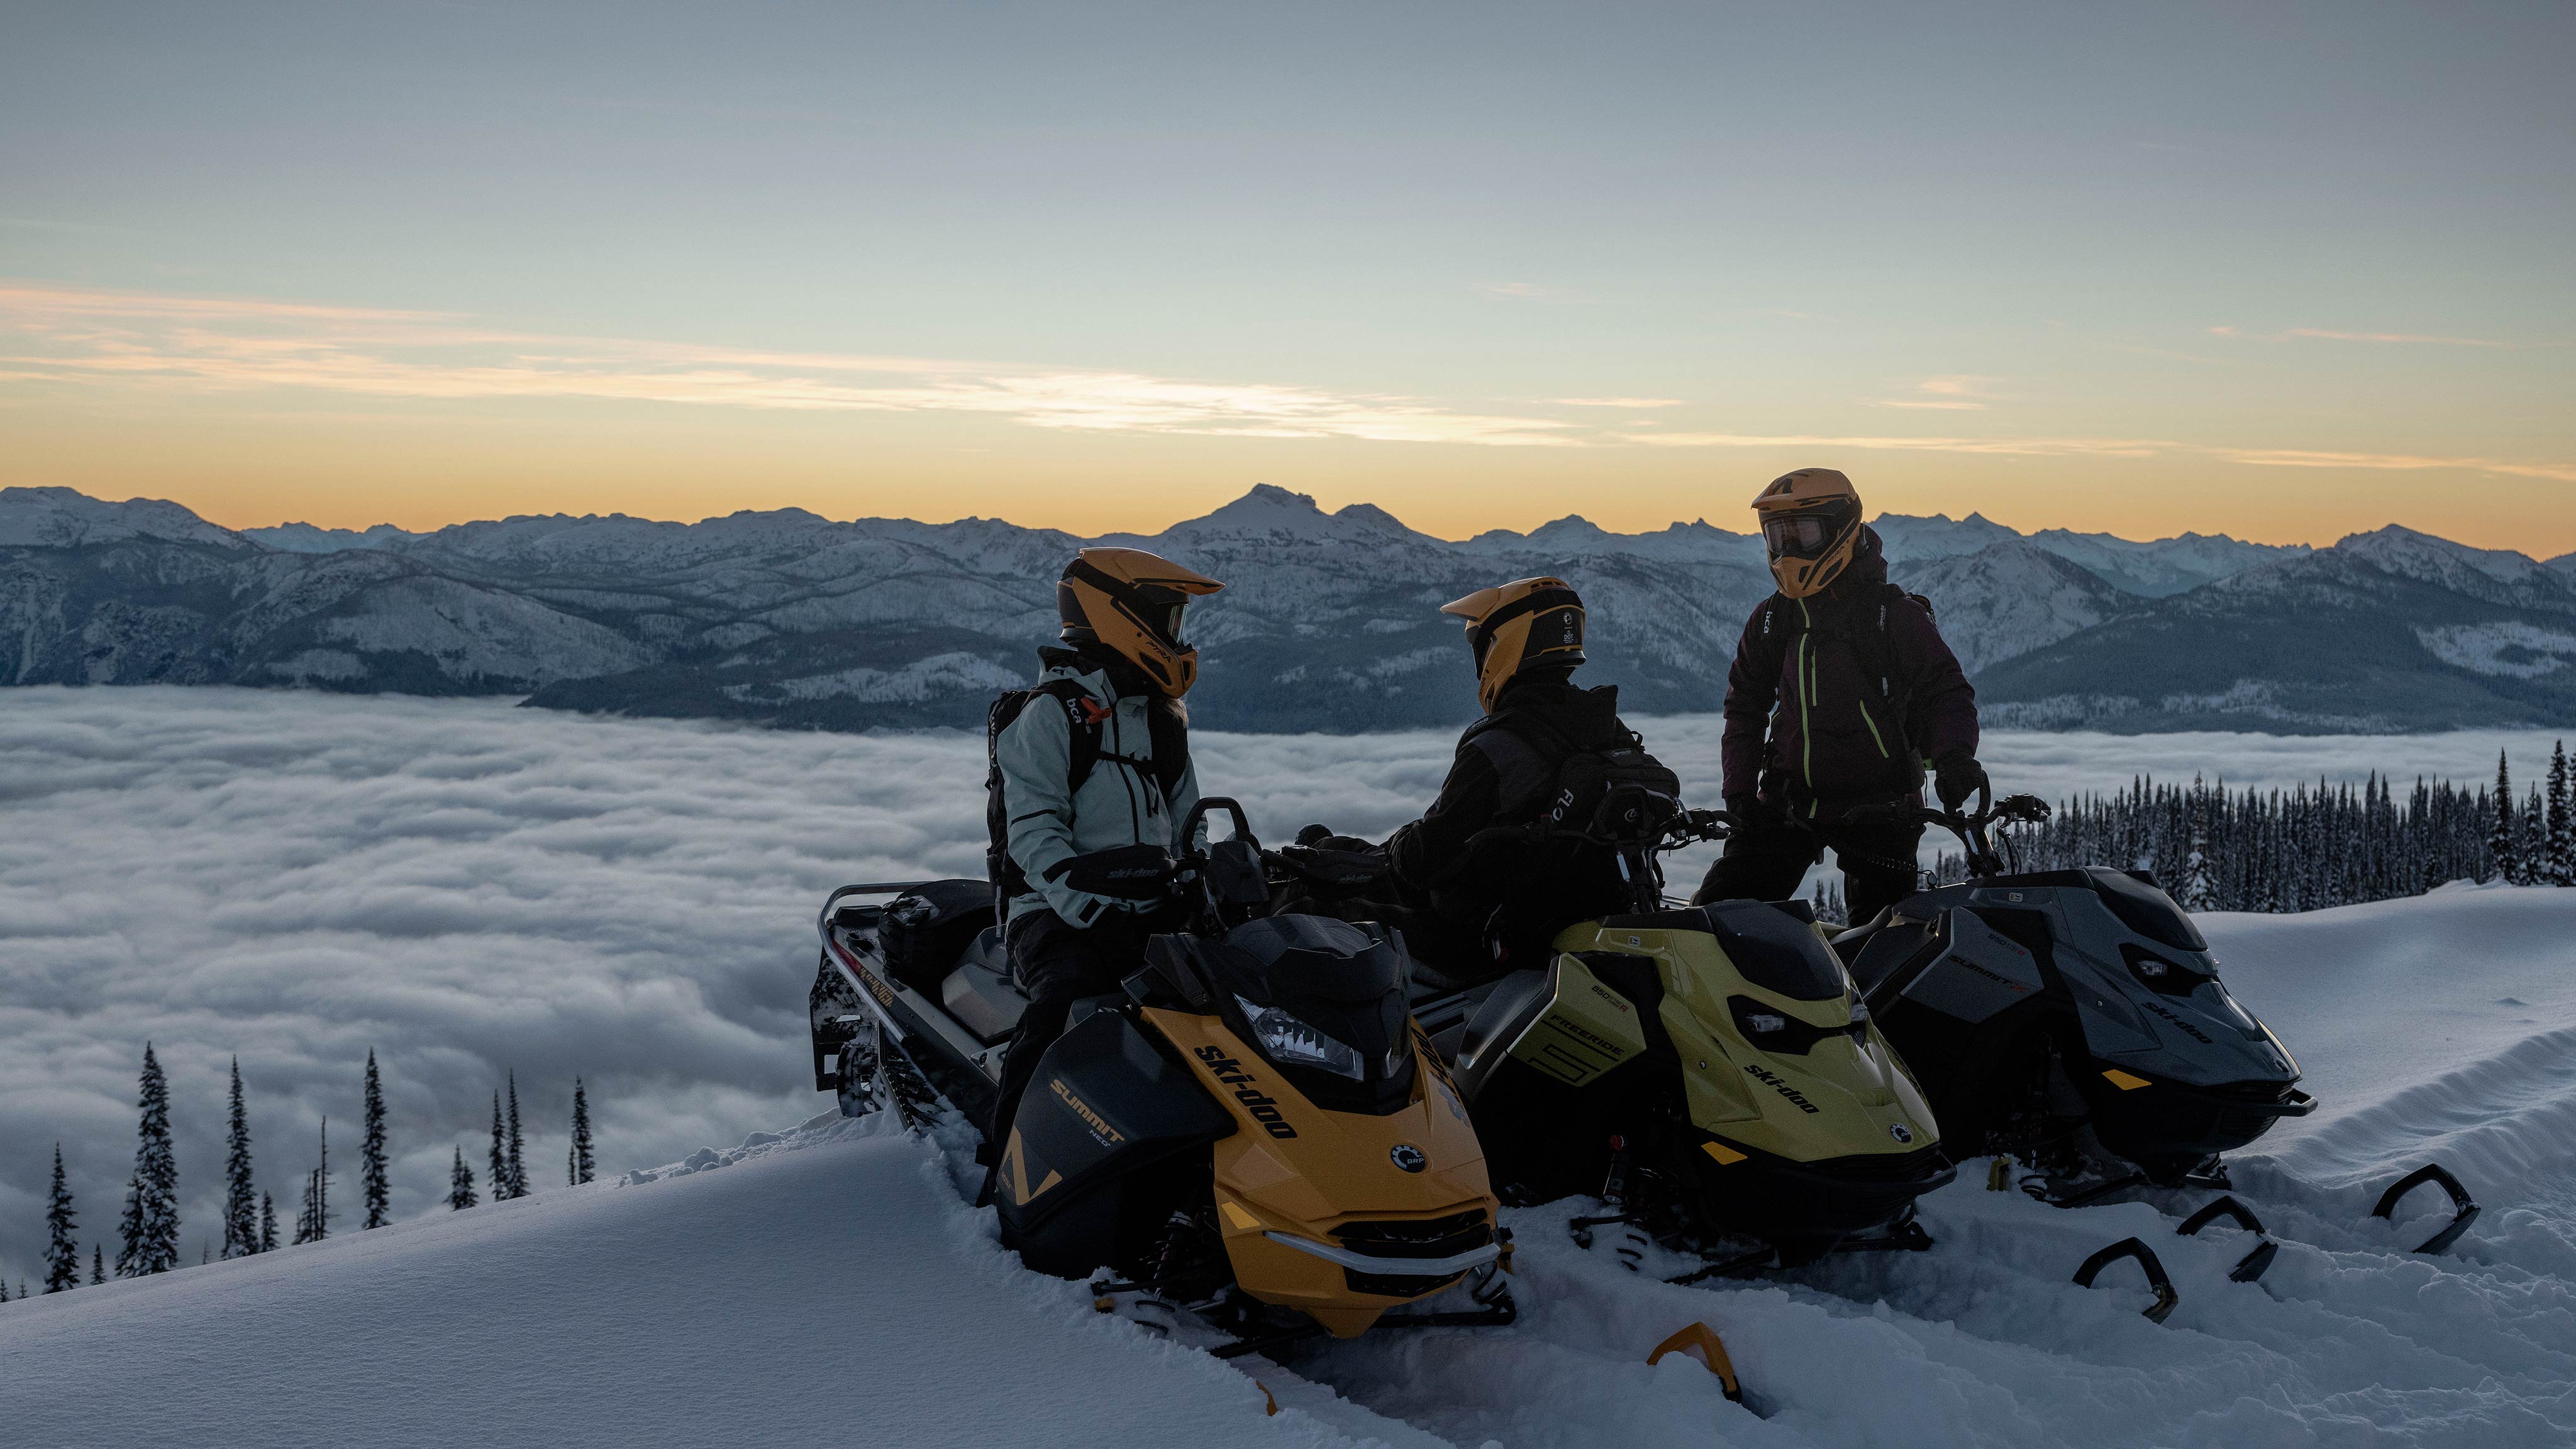 Traja jazdci Ski-Doo na ich skútroch na vrchole kopca